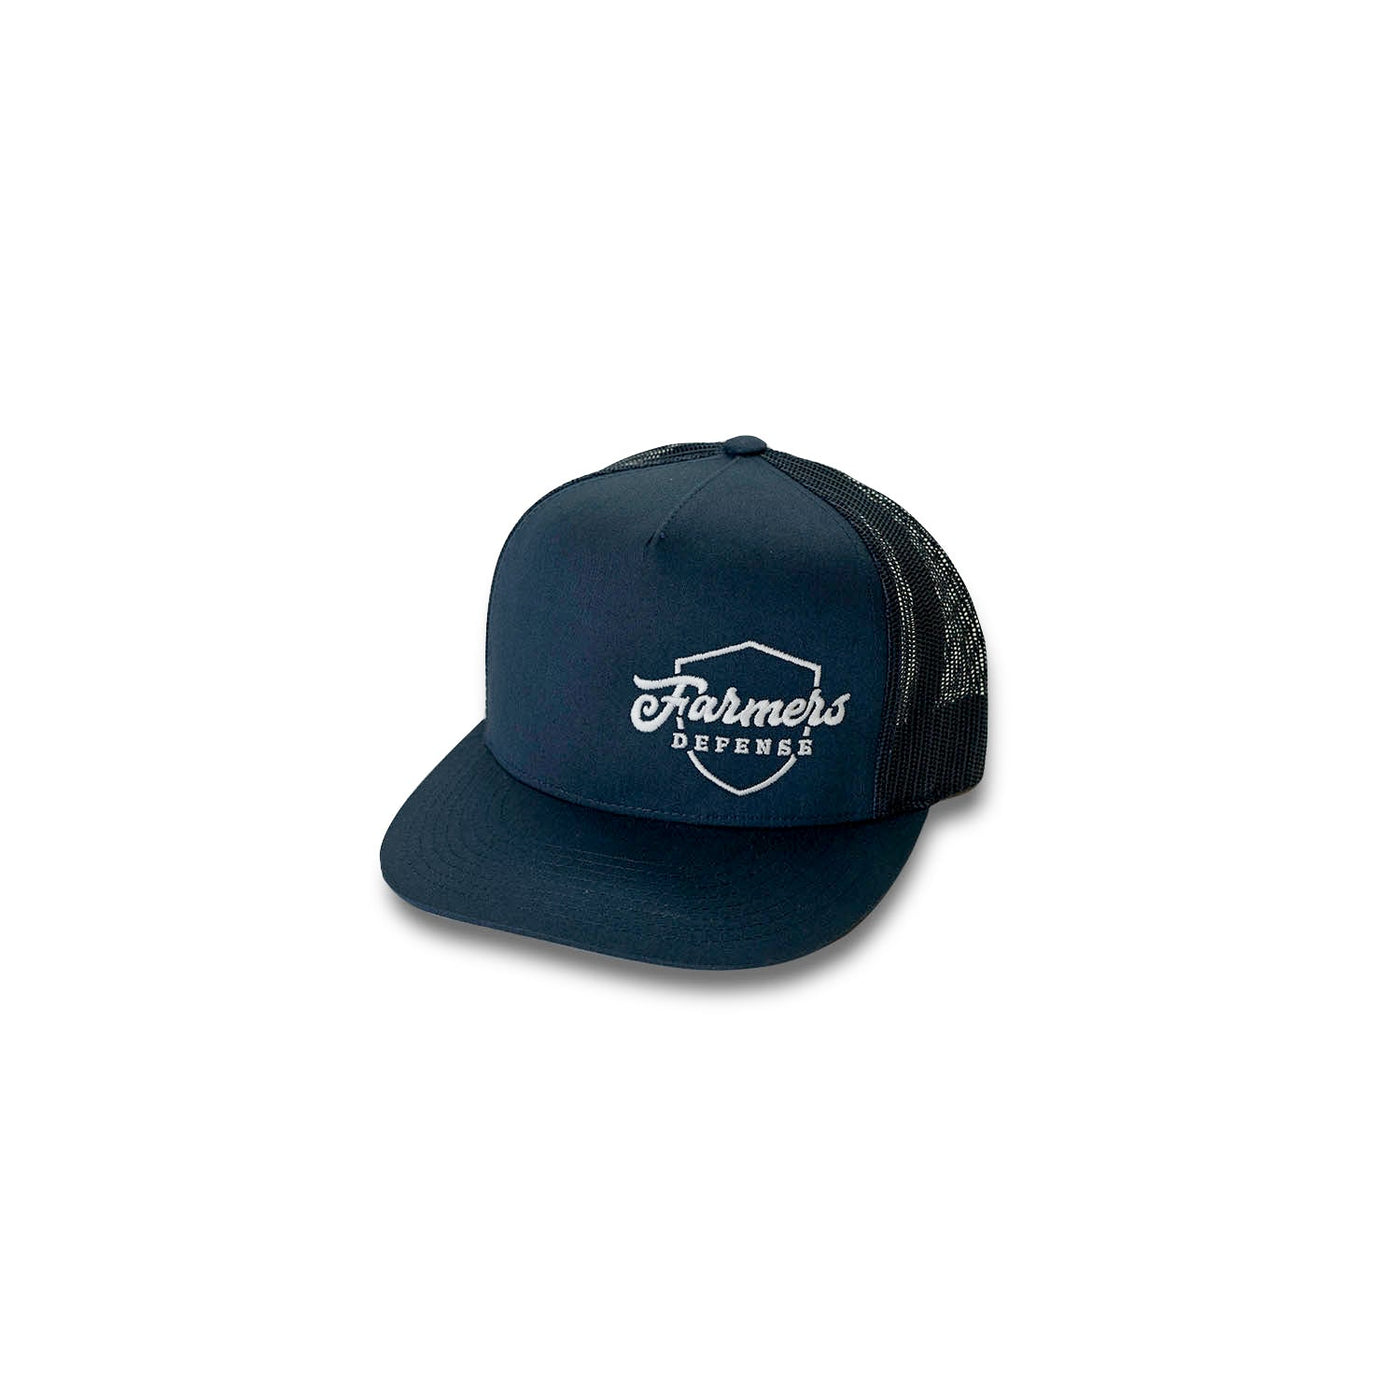 Farmers Defense Trucker Hat -Embroidered Shield Logo Navy on Navy